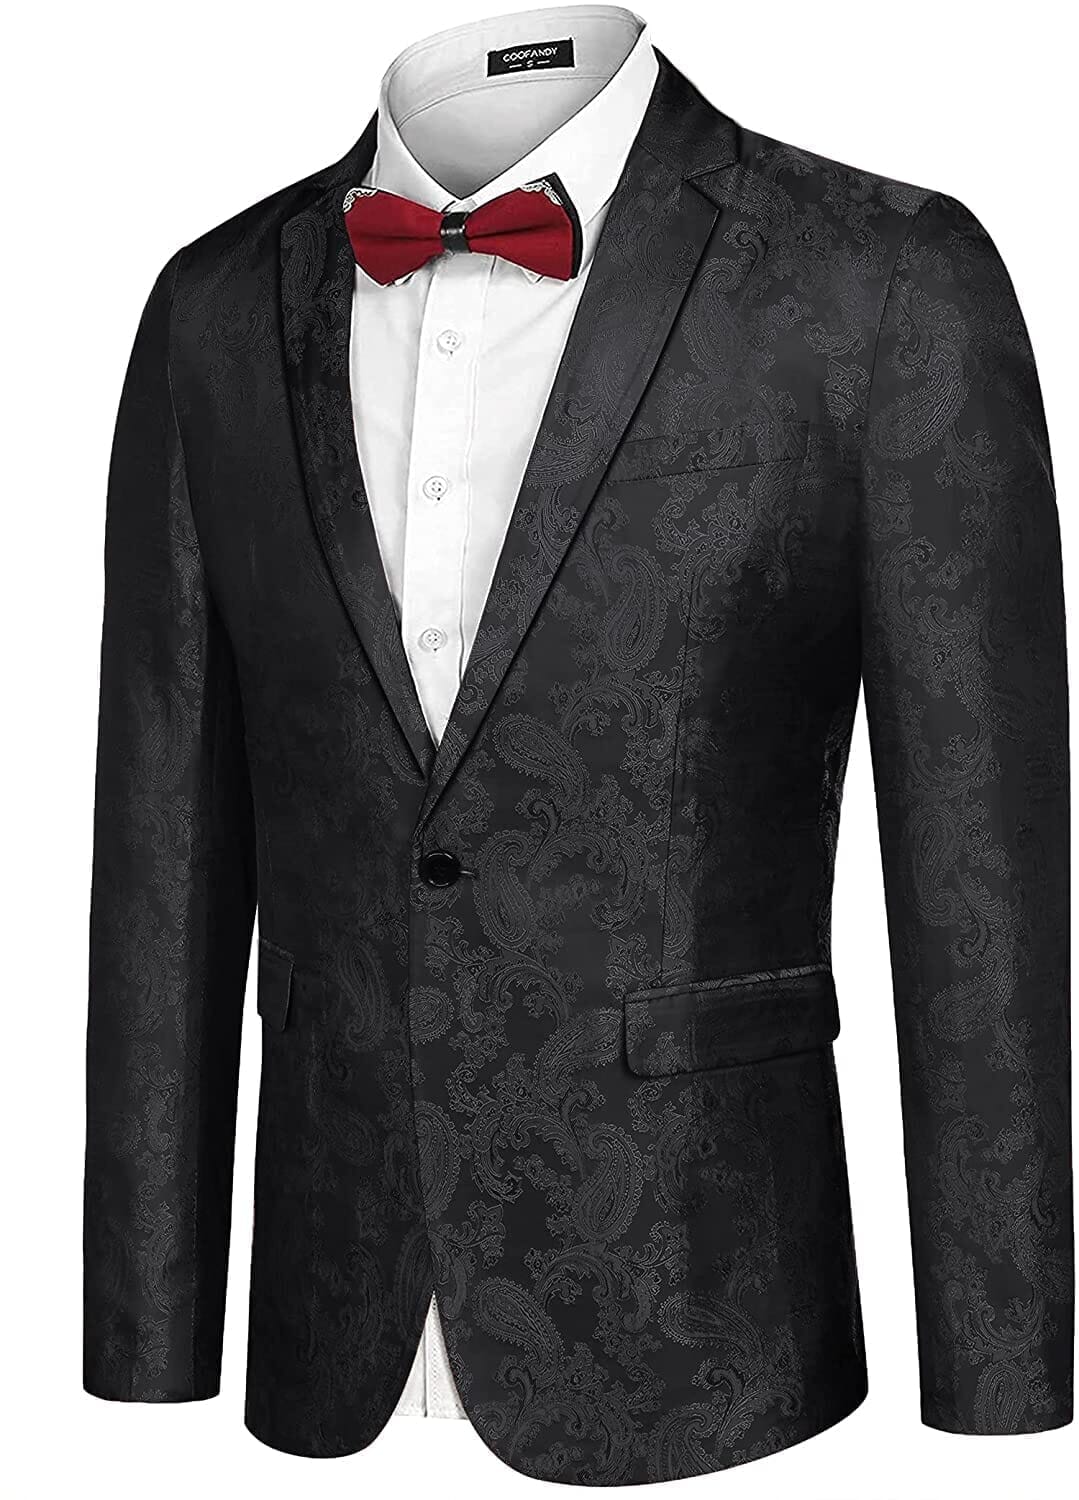 Coofandy Lapel Stylish Suit Jacket (US Only) Blazer coofandy Black S 